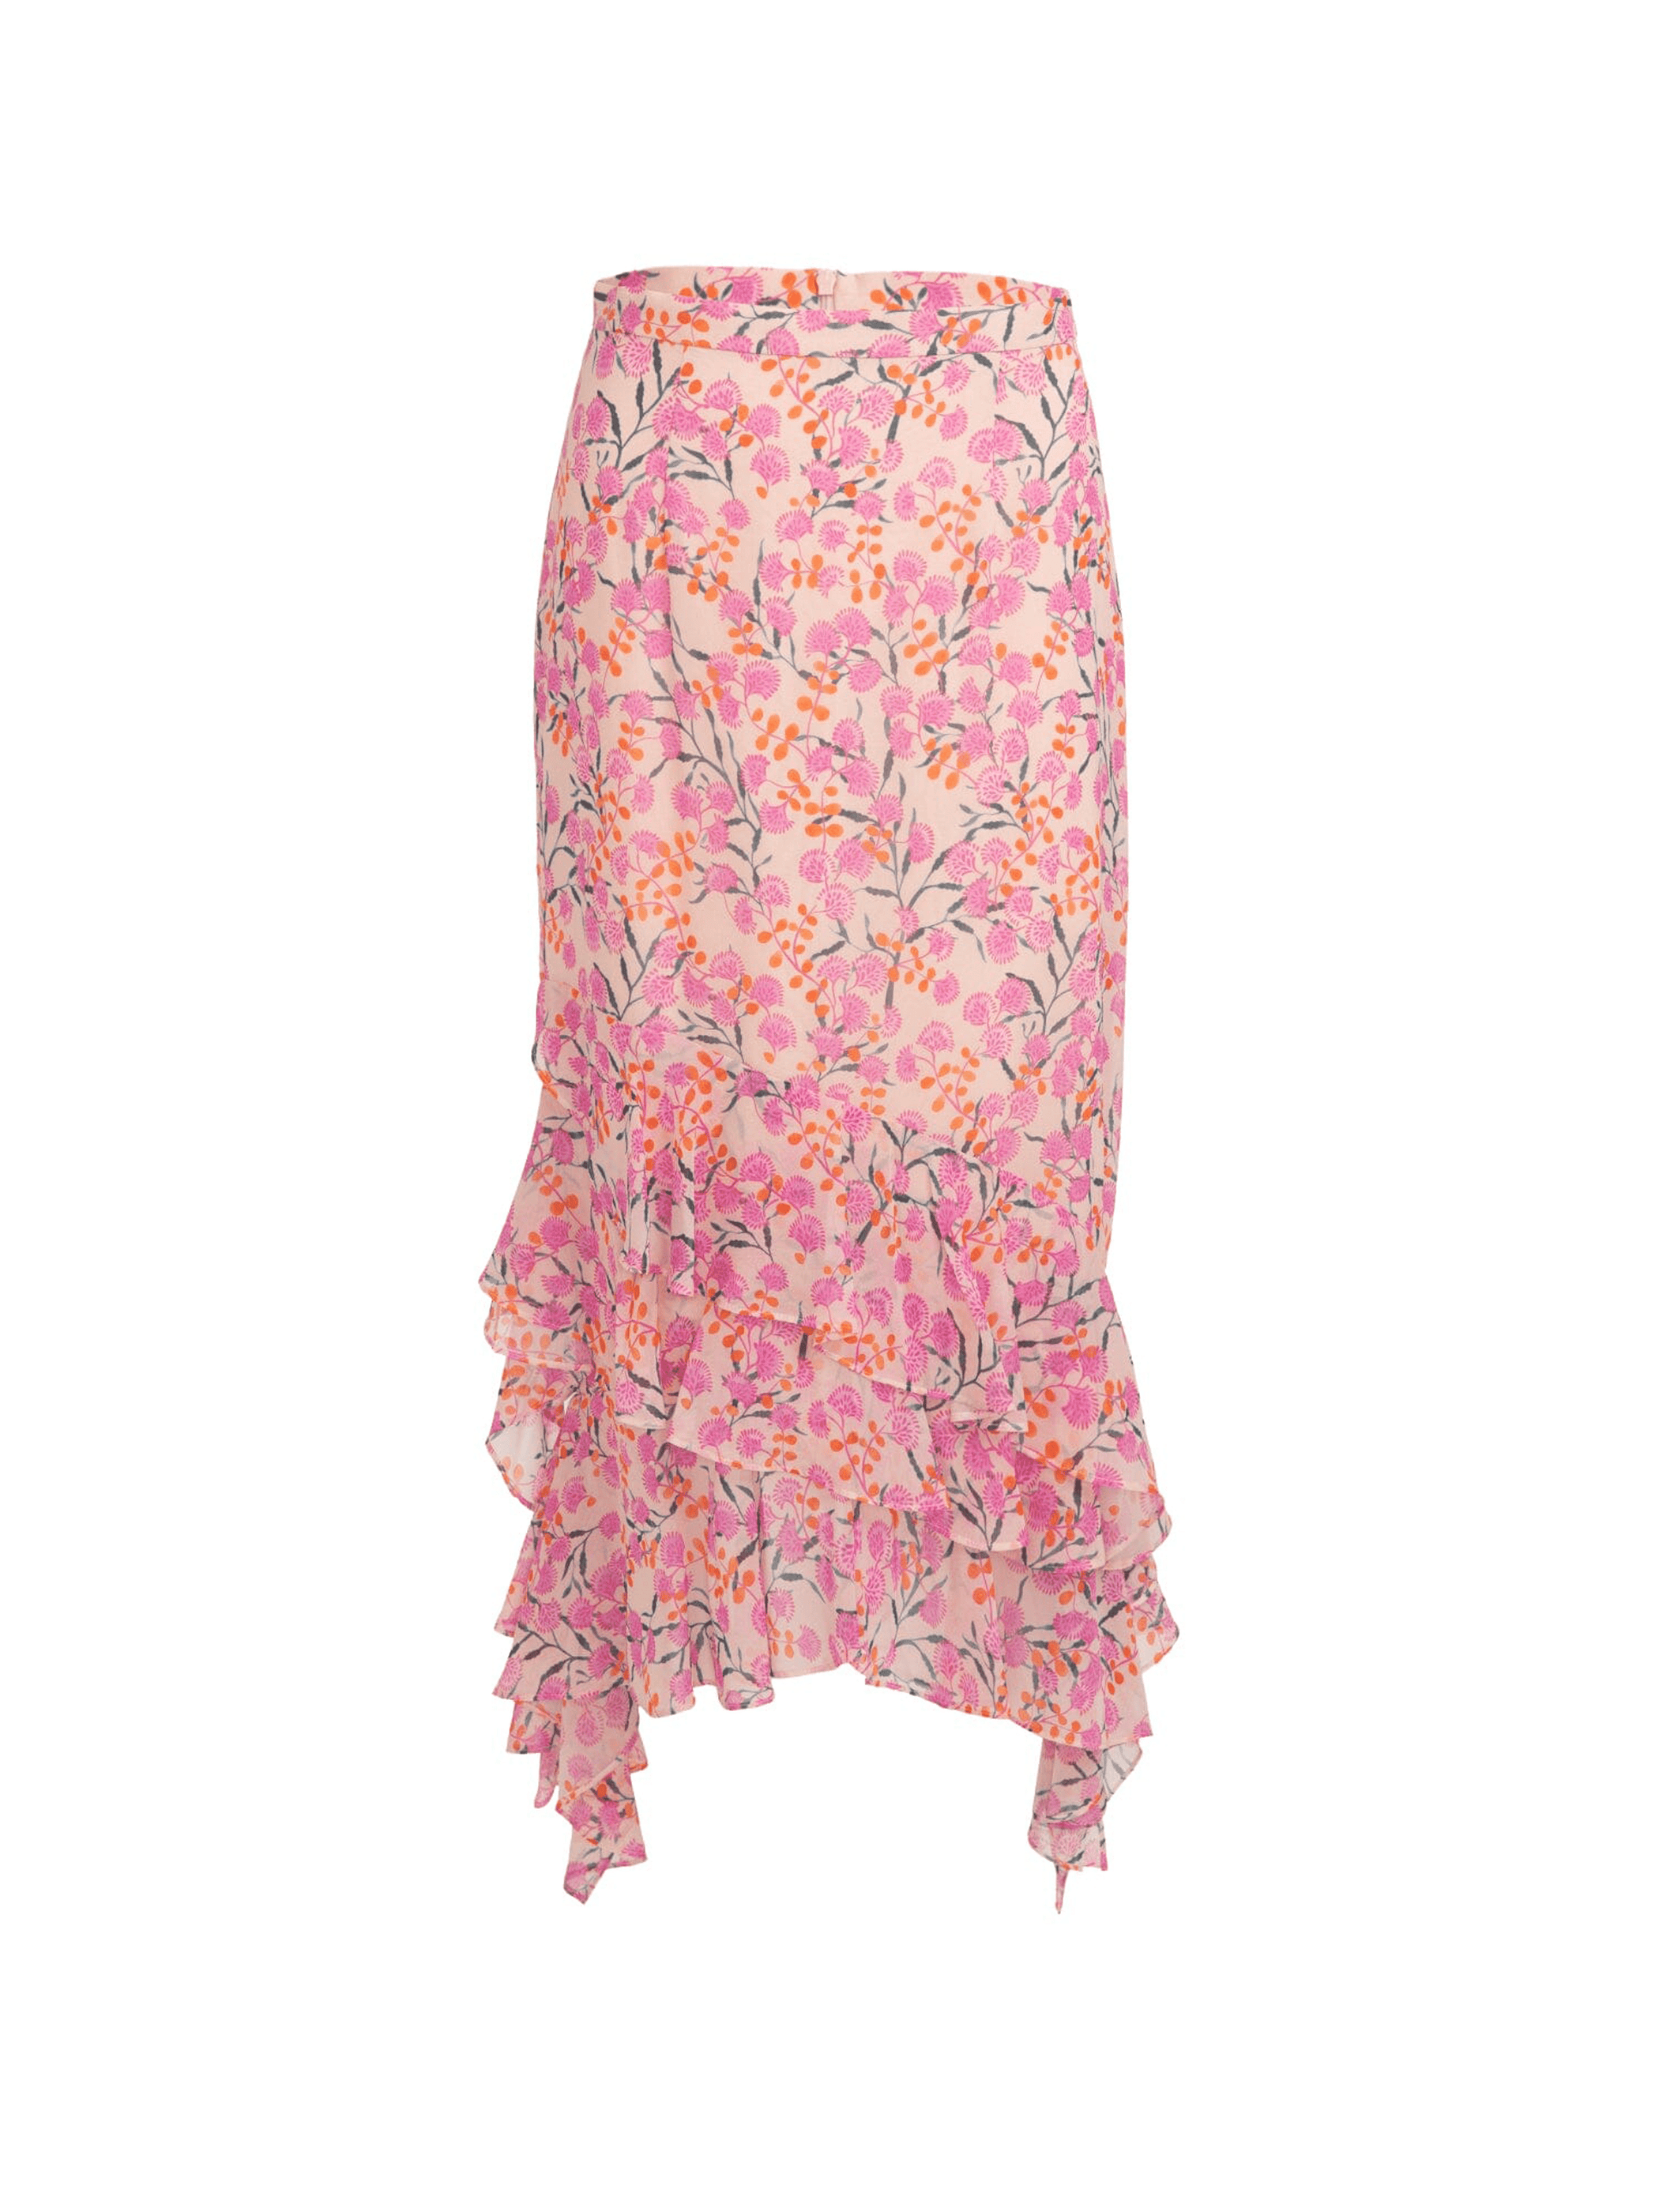 Lita Skirt in Samphire Coral